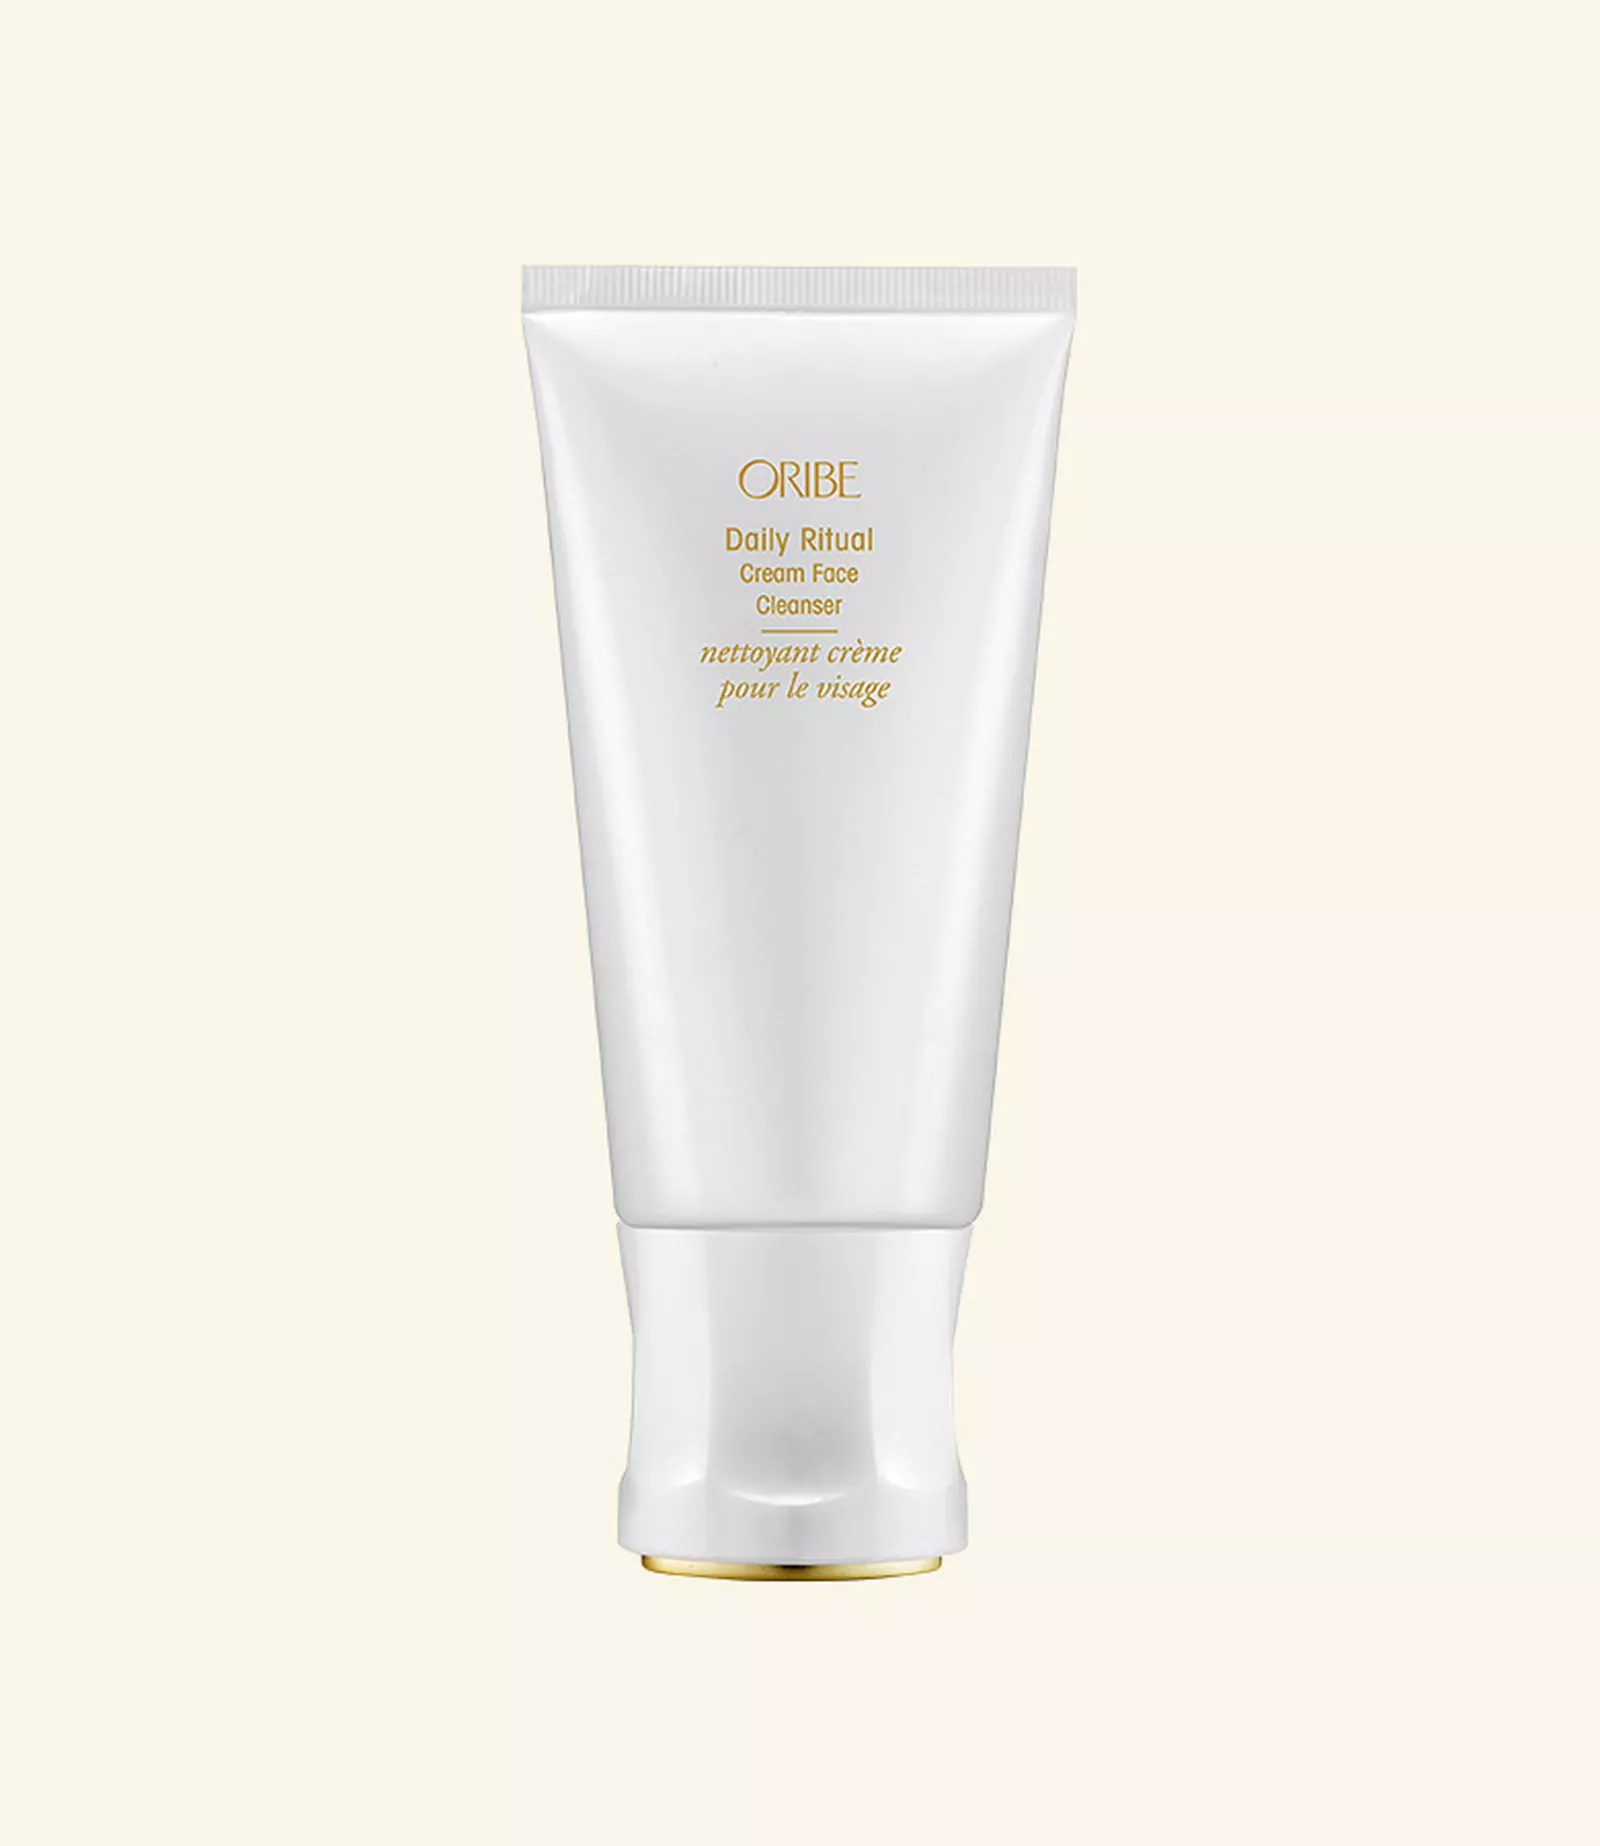 Oribe, нежное молочко для очищения лица Daily Ritual Cream Face Cleanser